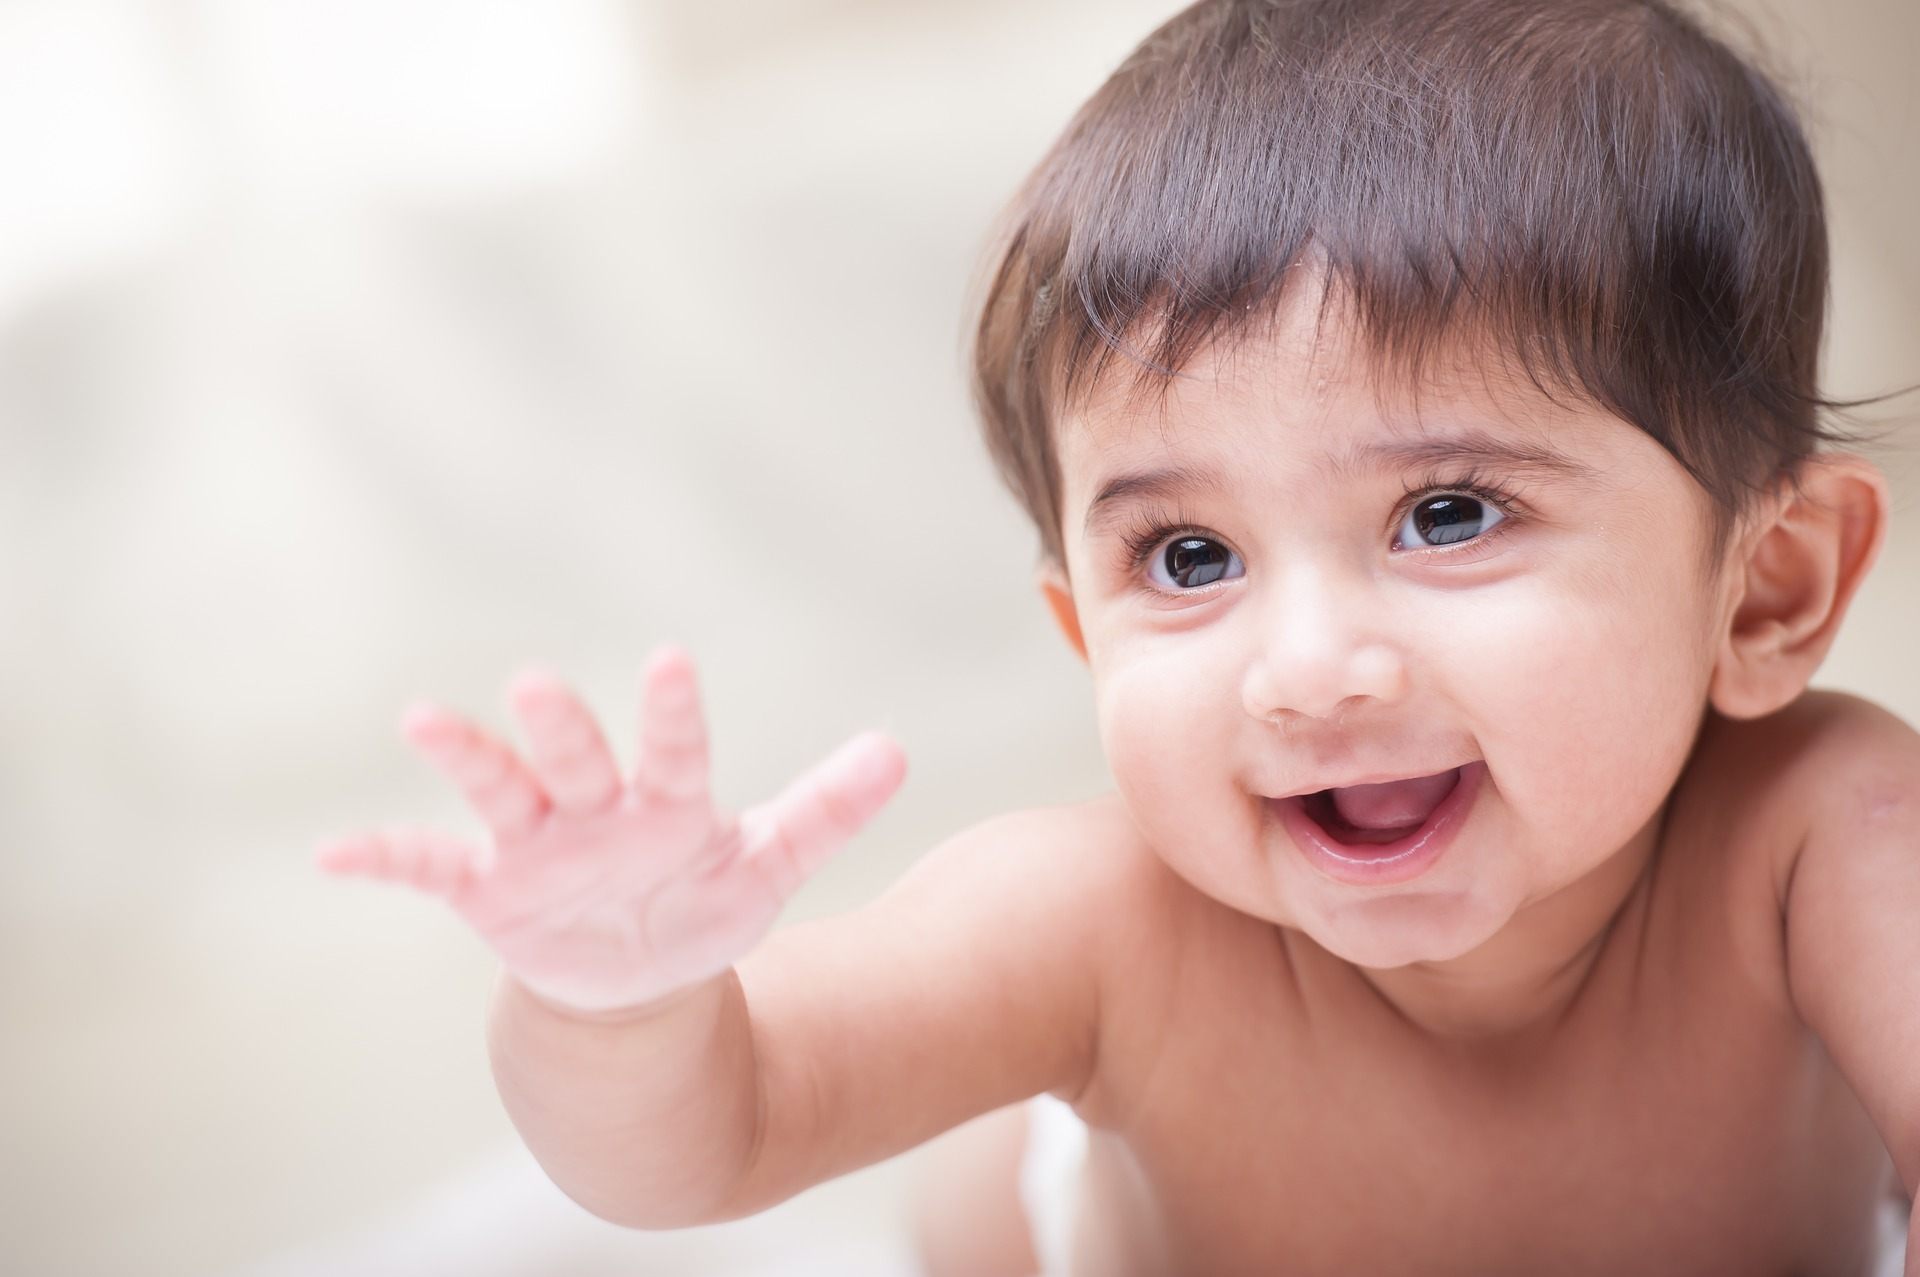 fondos de pantalla de bebé indio para escritorio,niño,cara,bebé,niñito,belleza